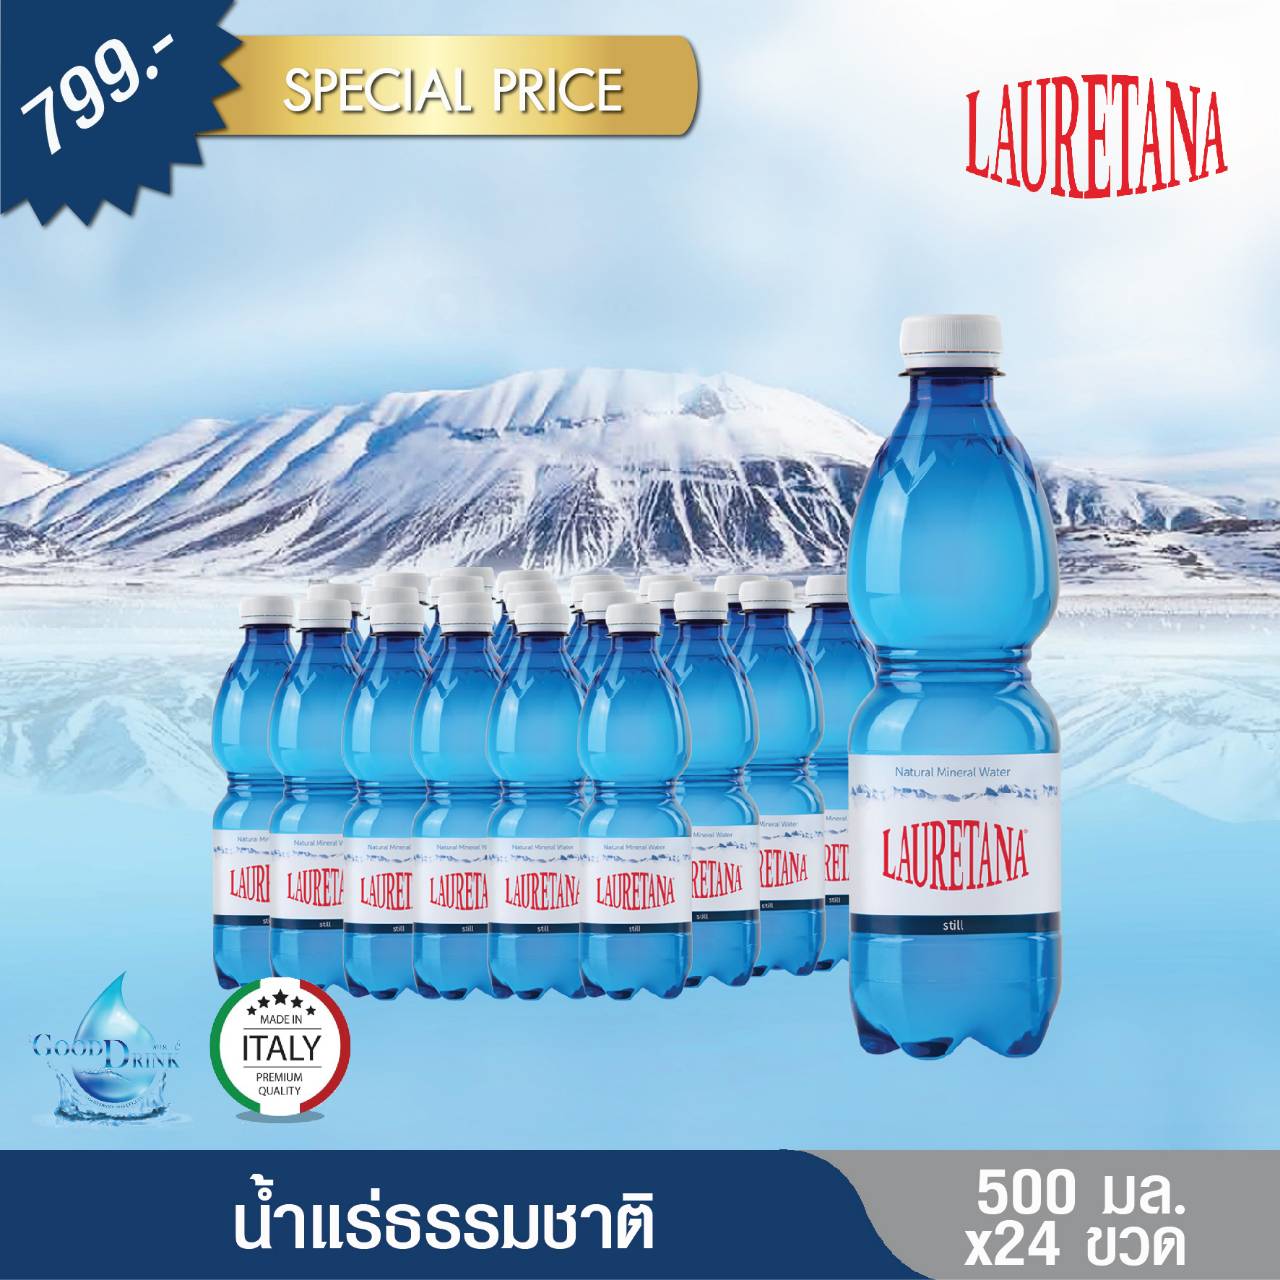 Lauretana Natural Mineral Water PET 100% recyclable bottles 500 ML. Pack 24 bottles, เลาว์เรตาน่า น้ำแร่ธรรมชาติ ขวดพลาสติก รีไซเคิล 500 มล. แพค 24 ขวด